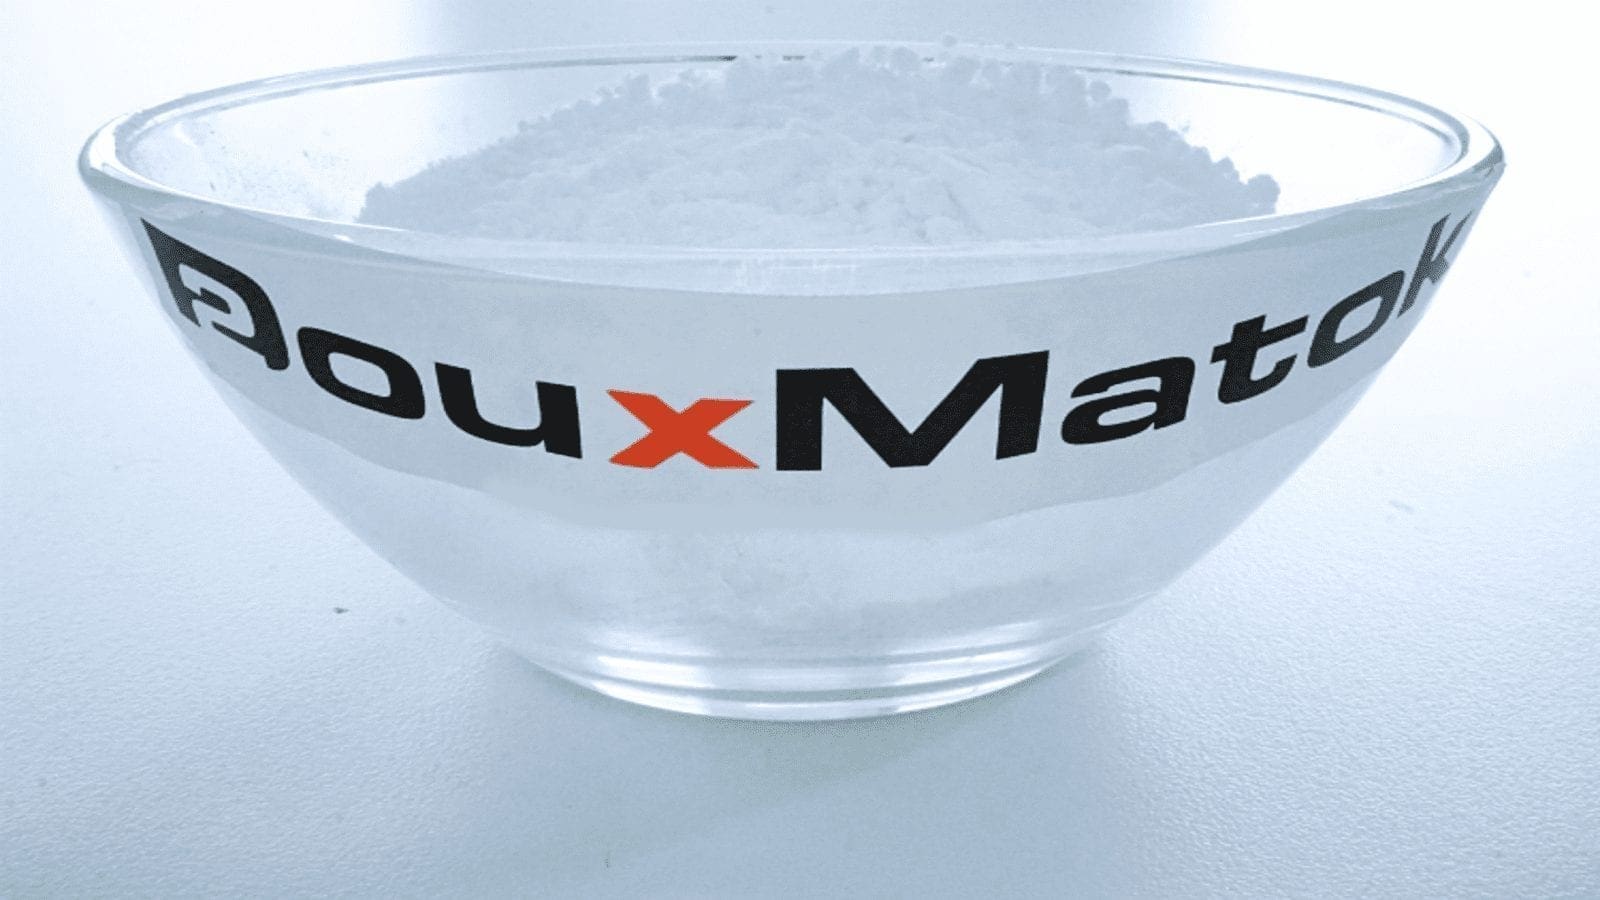 DouxMatok partners Lantic to commercialize revolutionary sugar reduction ingredient